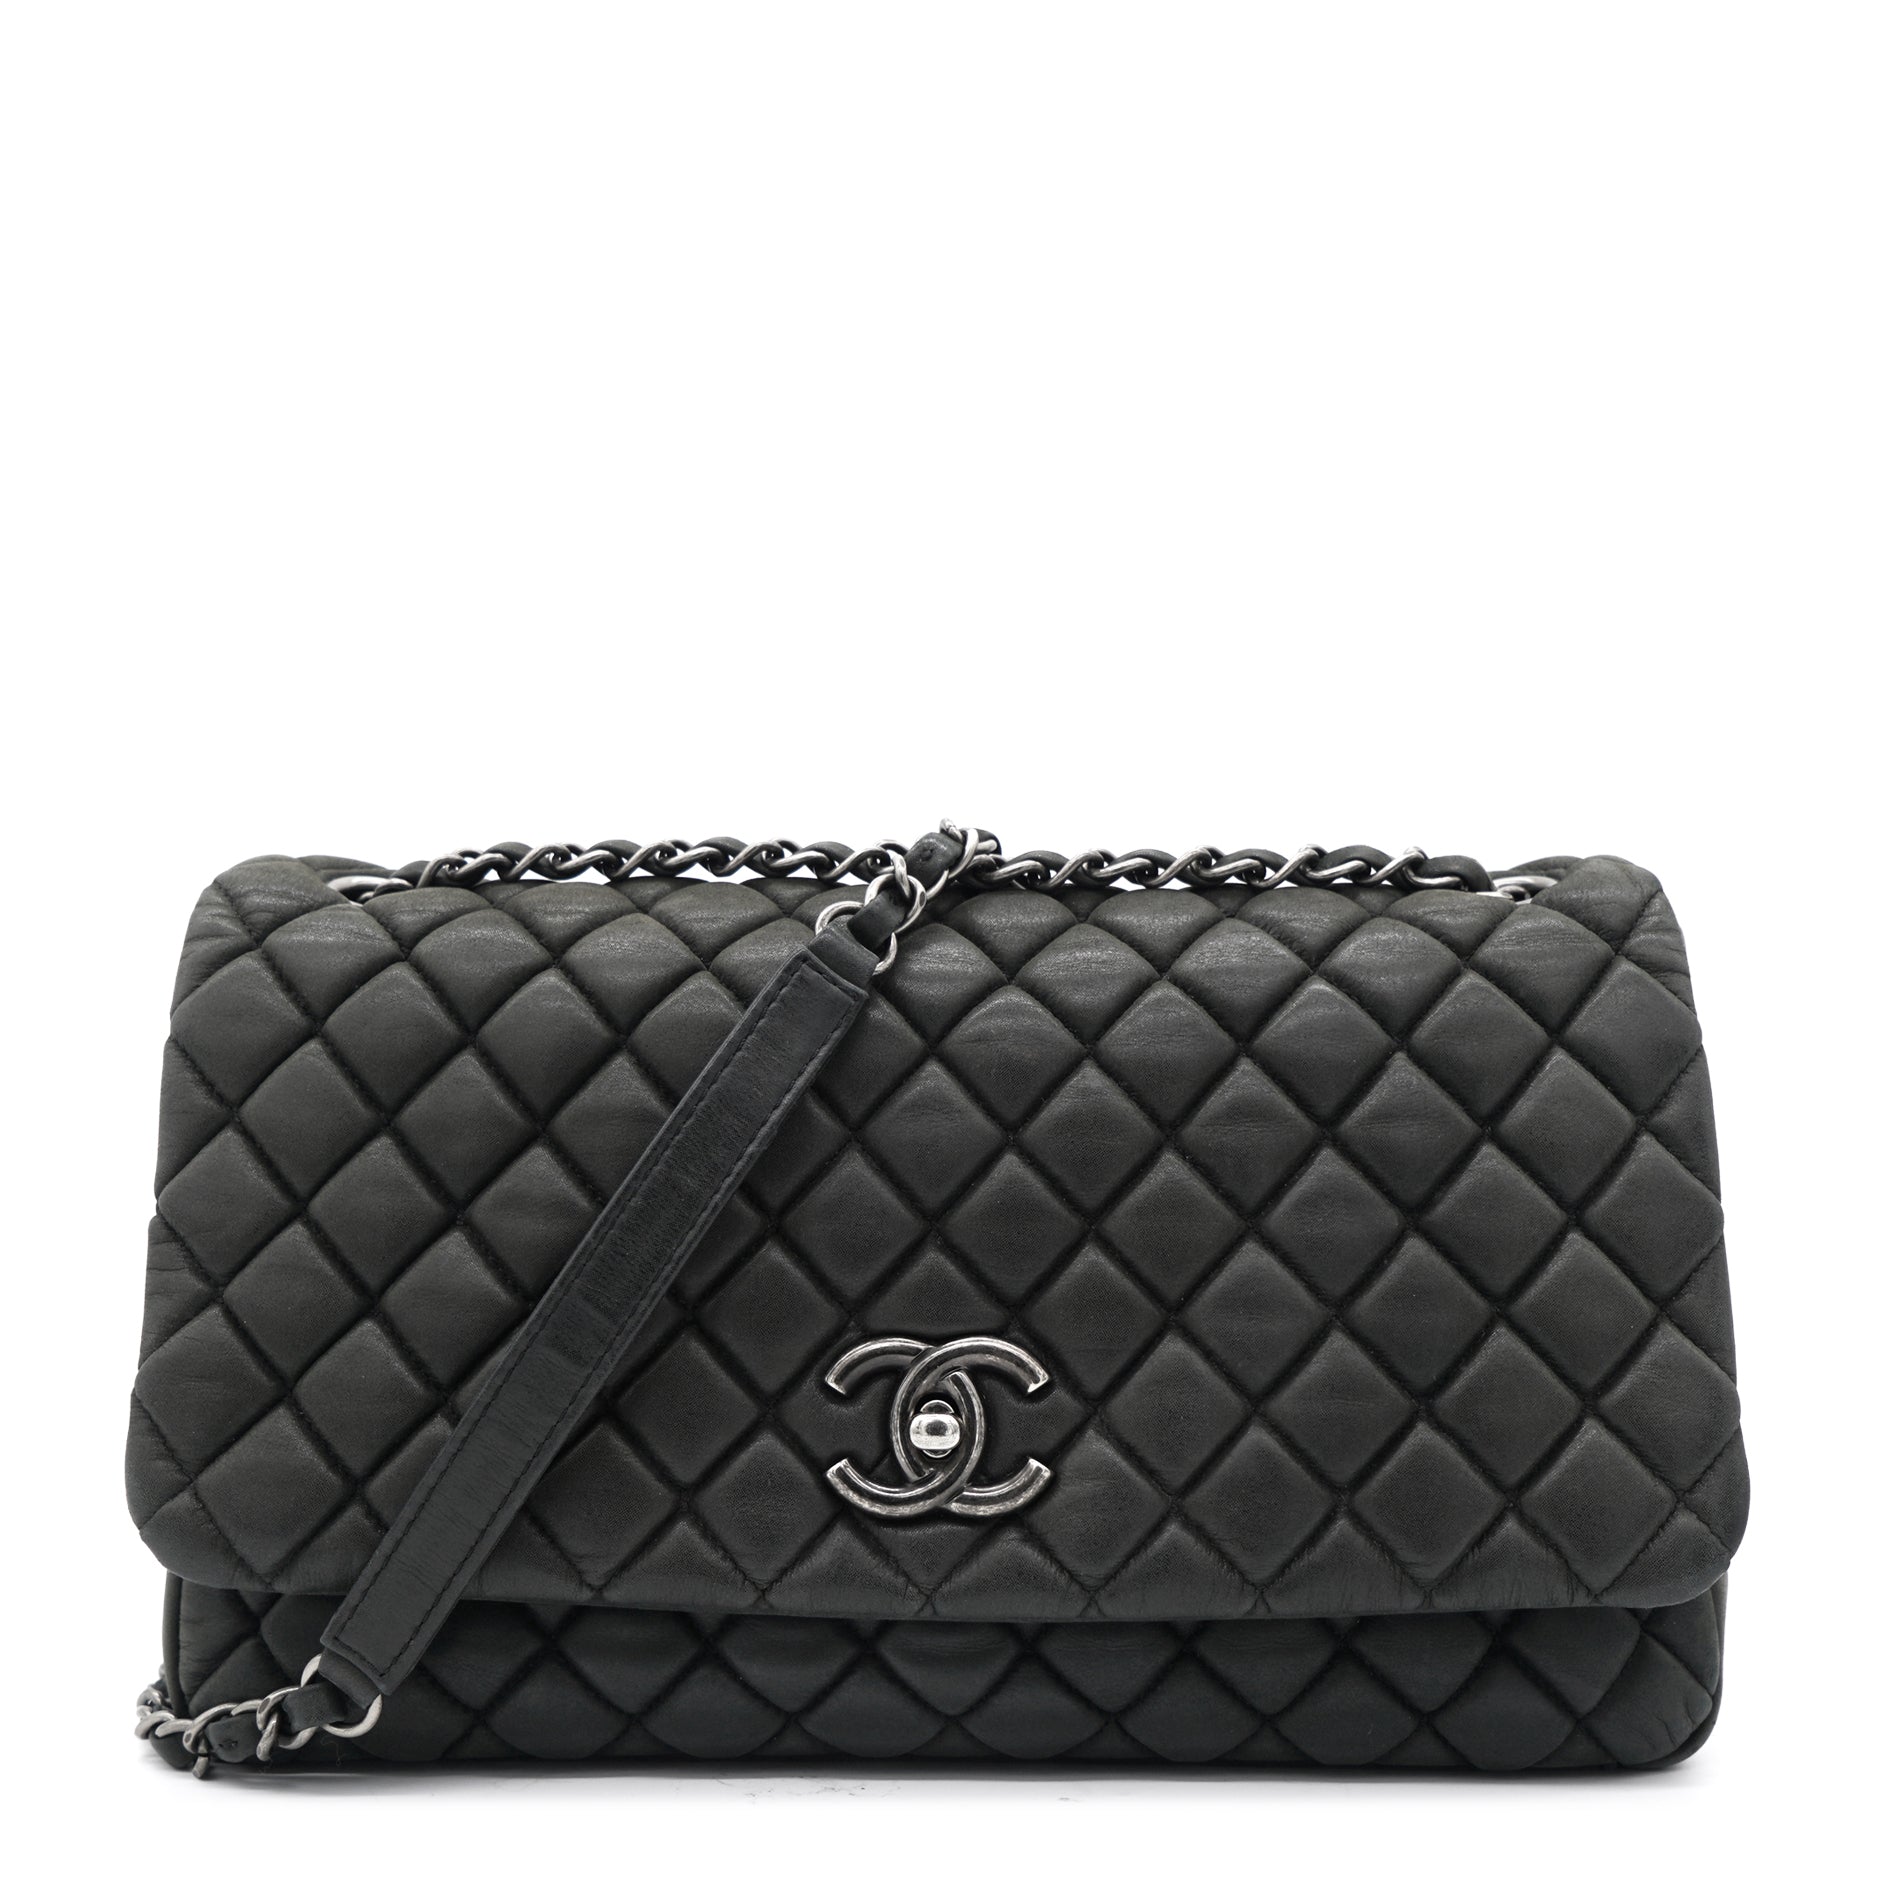 Black Chanel Bags  Black Chanel Purse for Sale  Madison Avenue Couture